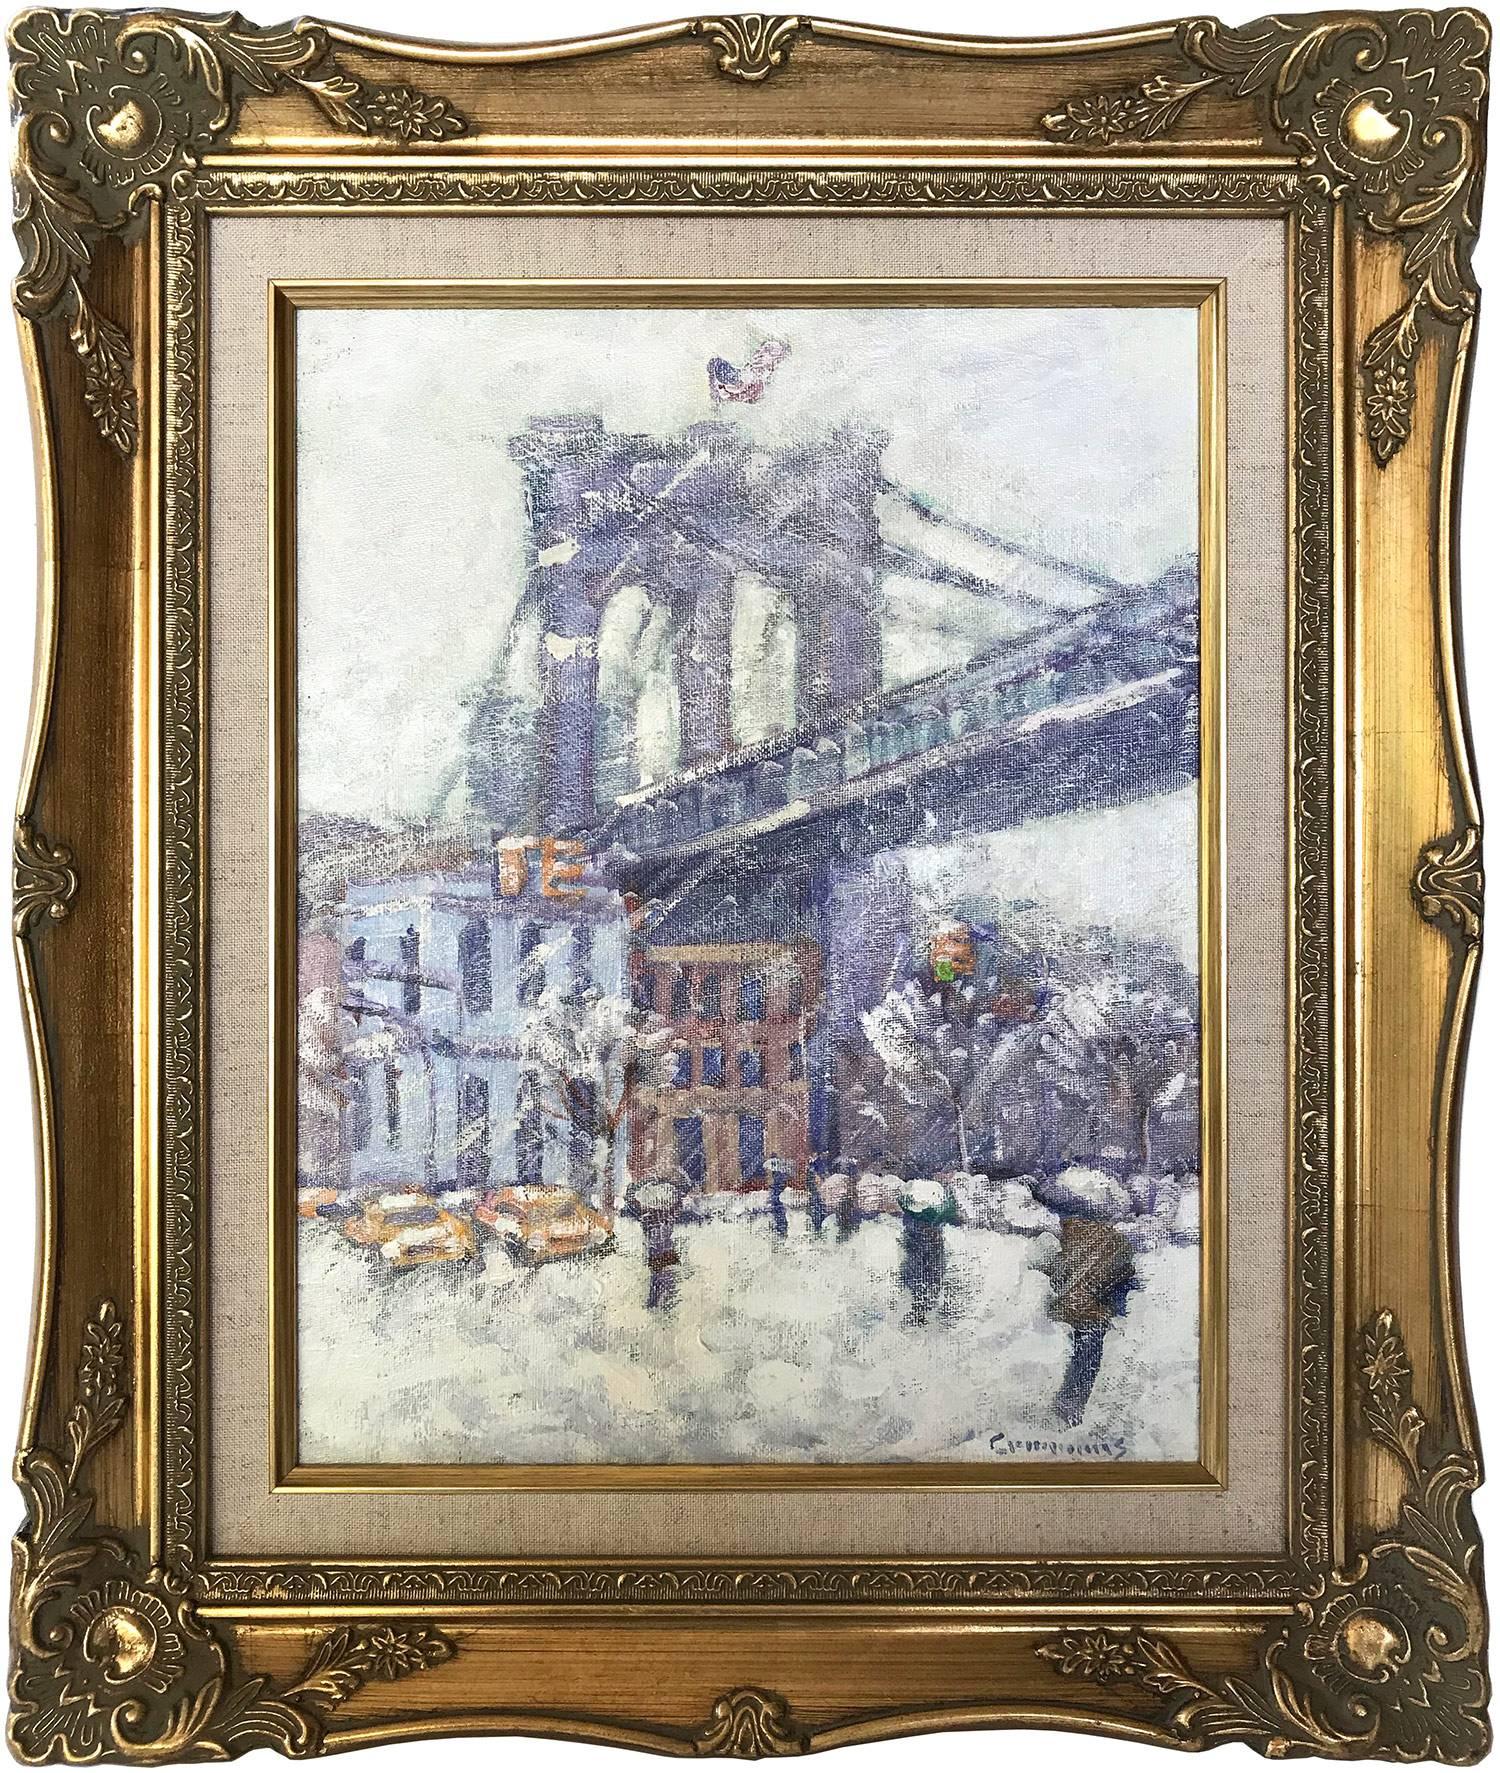 John Crimmins Landscape Painting - "Brooklyn Bridge" Impressionist Street Scene Oil Painting on Canvas Board